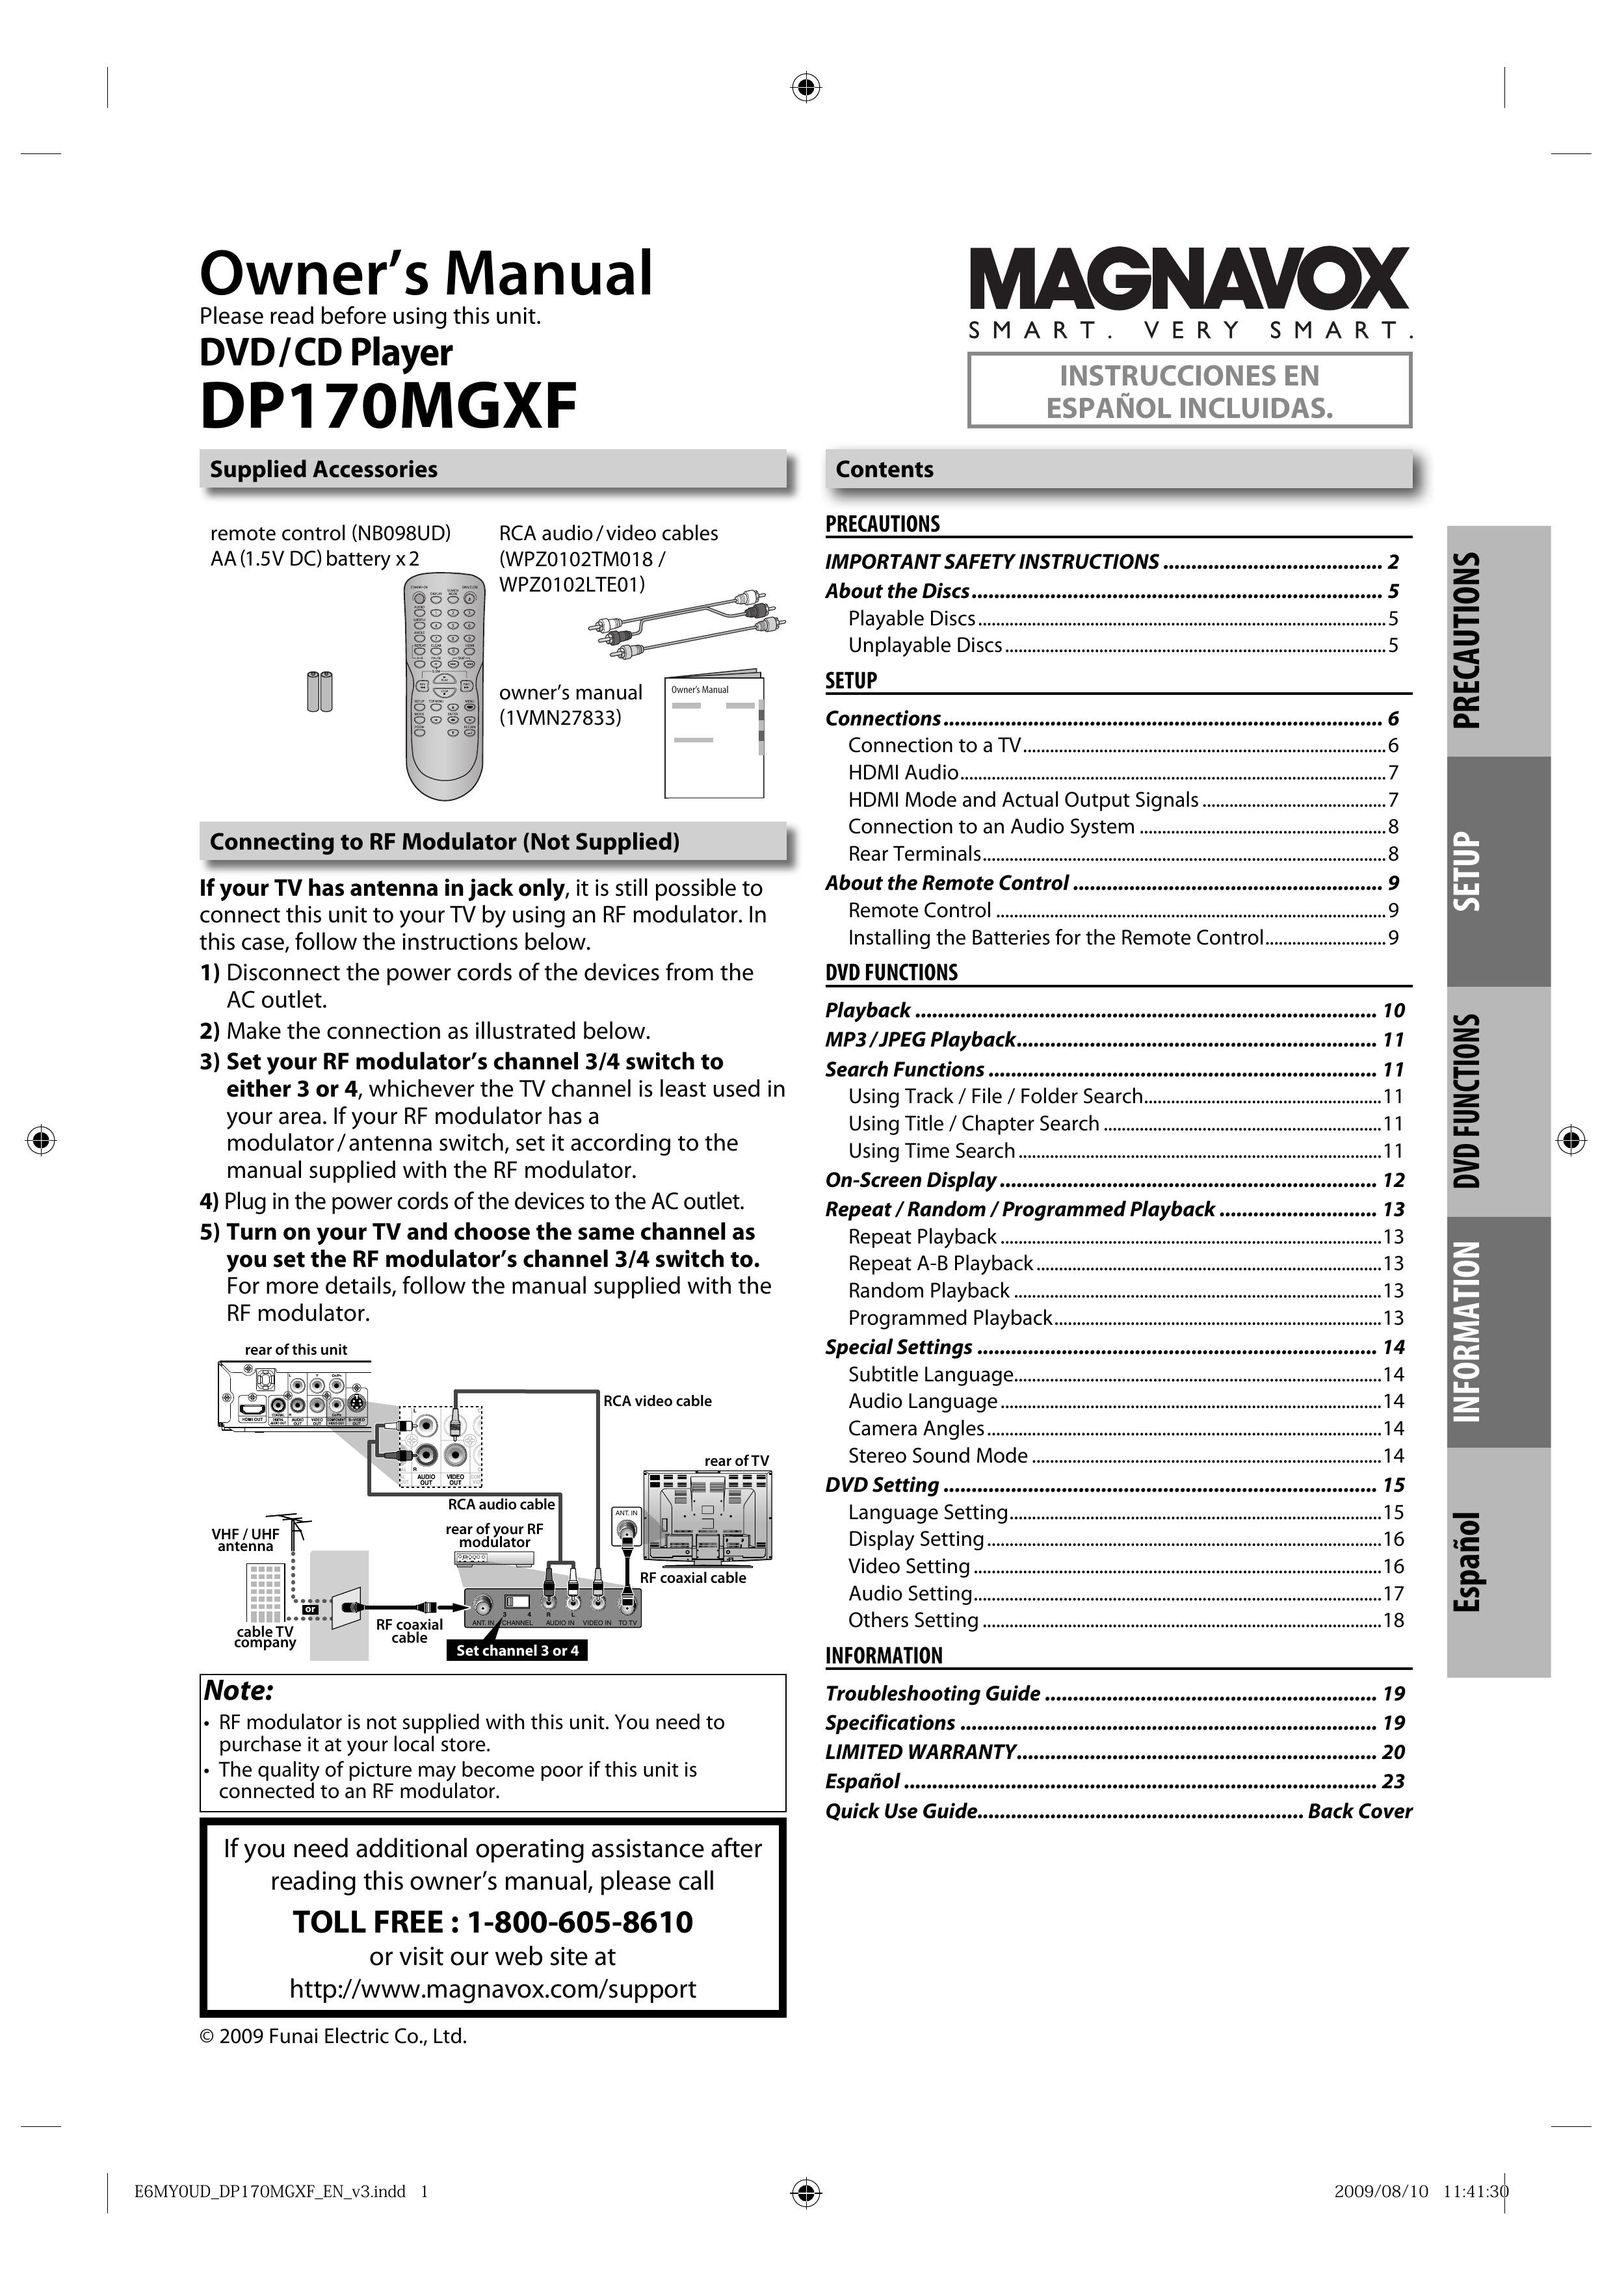 Magnavox DP170MGXF DVD Player User Manual